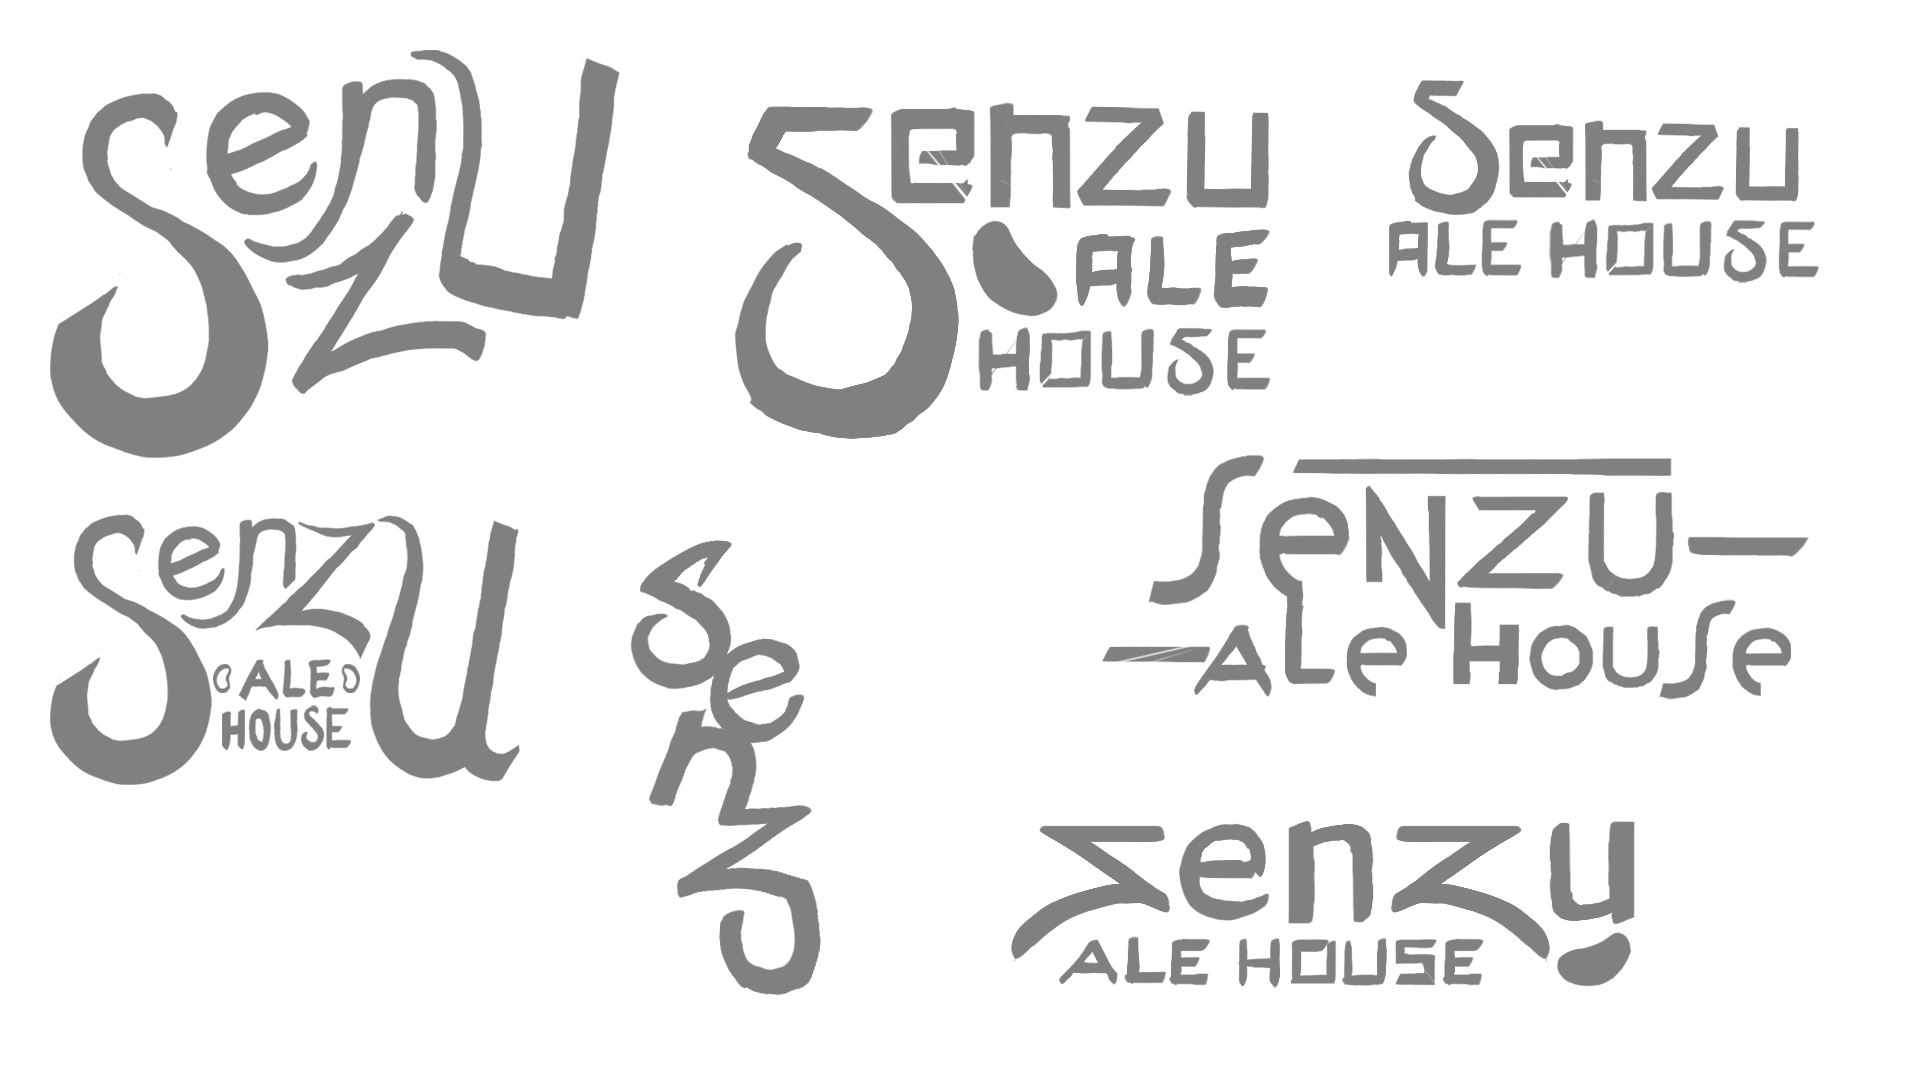 Senzu logo sketches